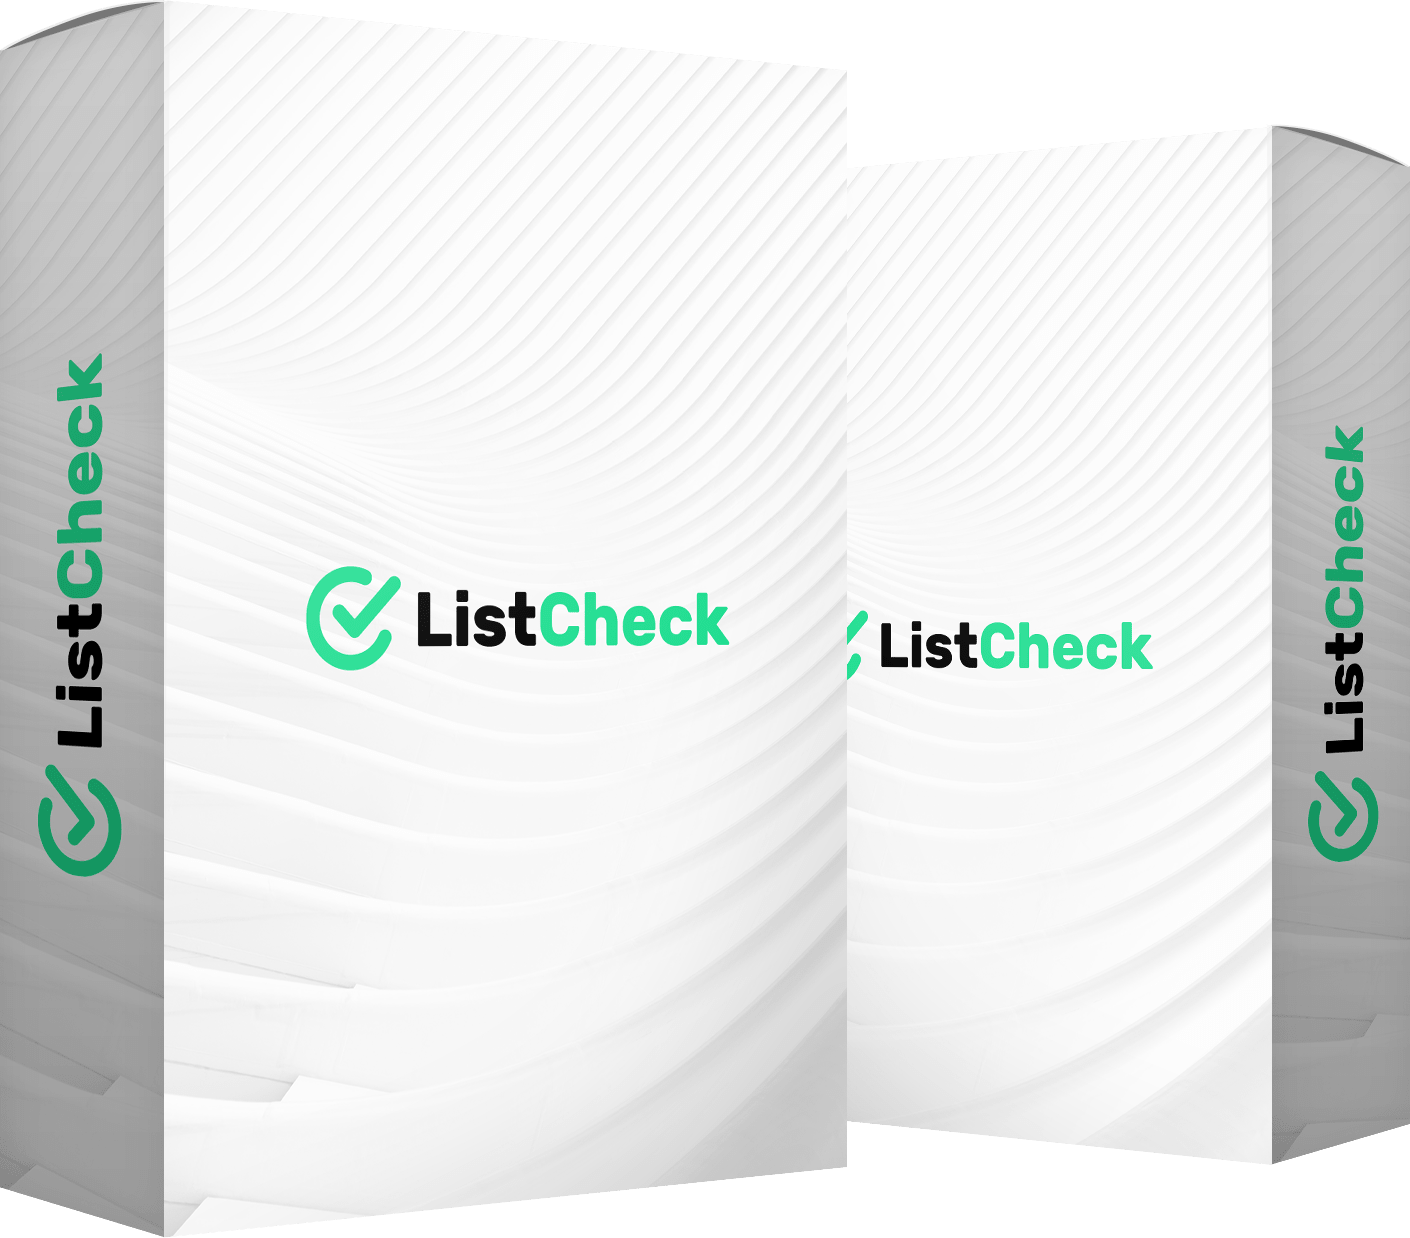 ListCheck